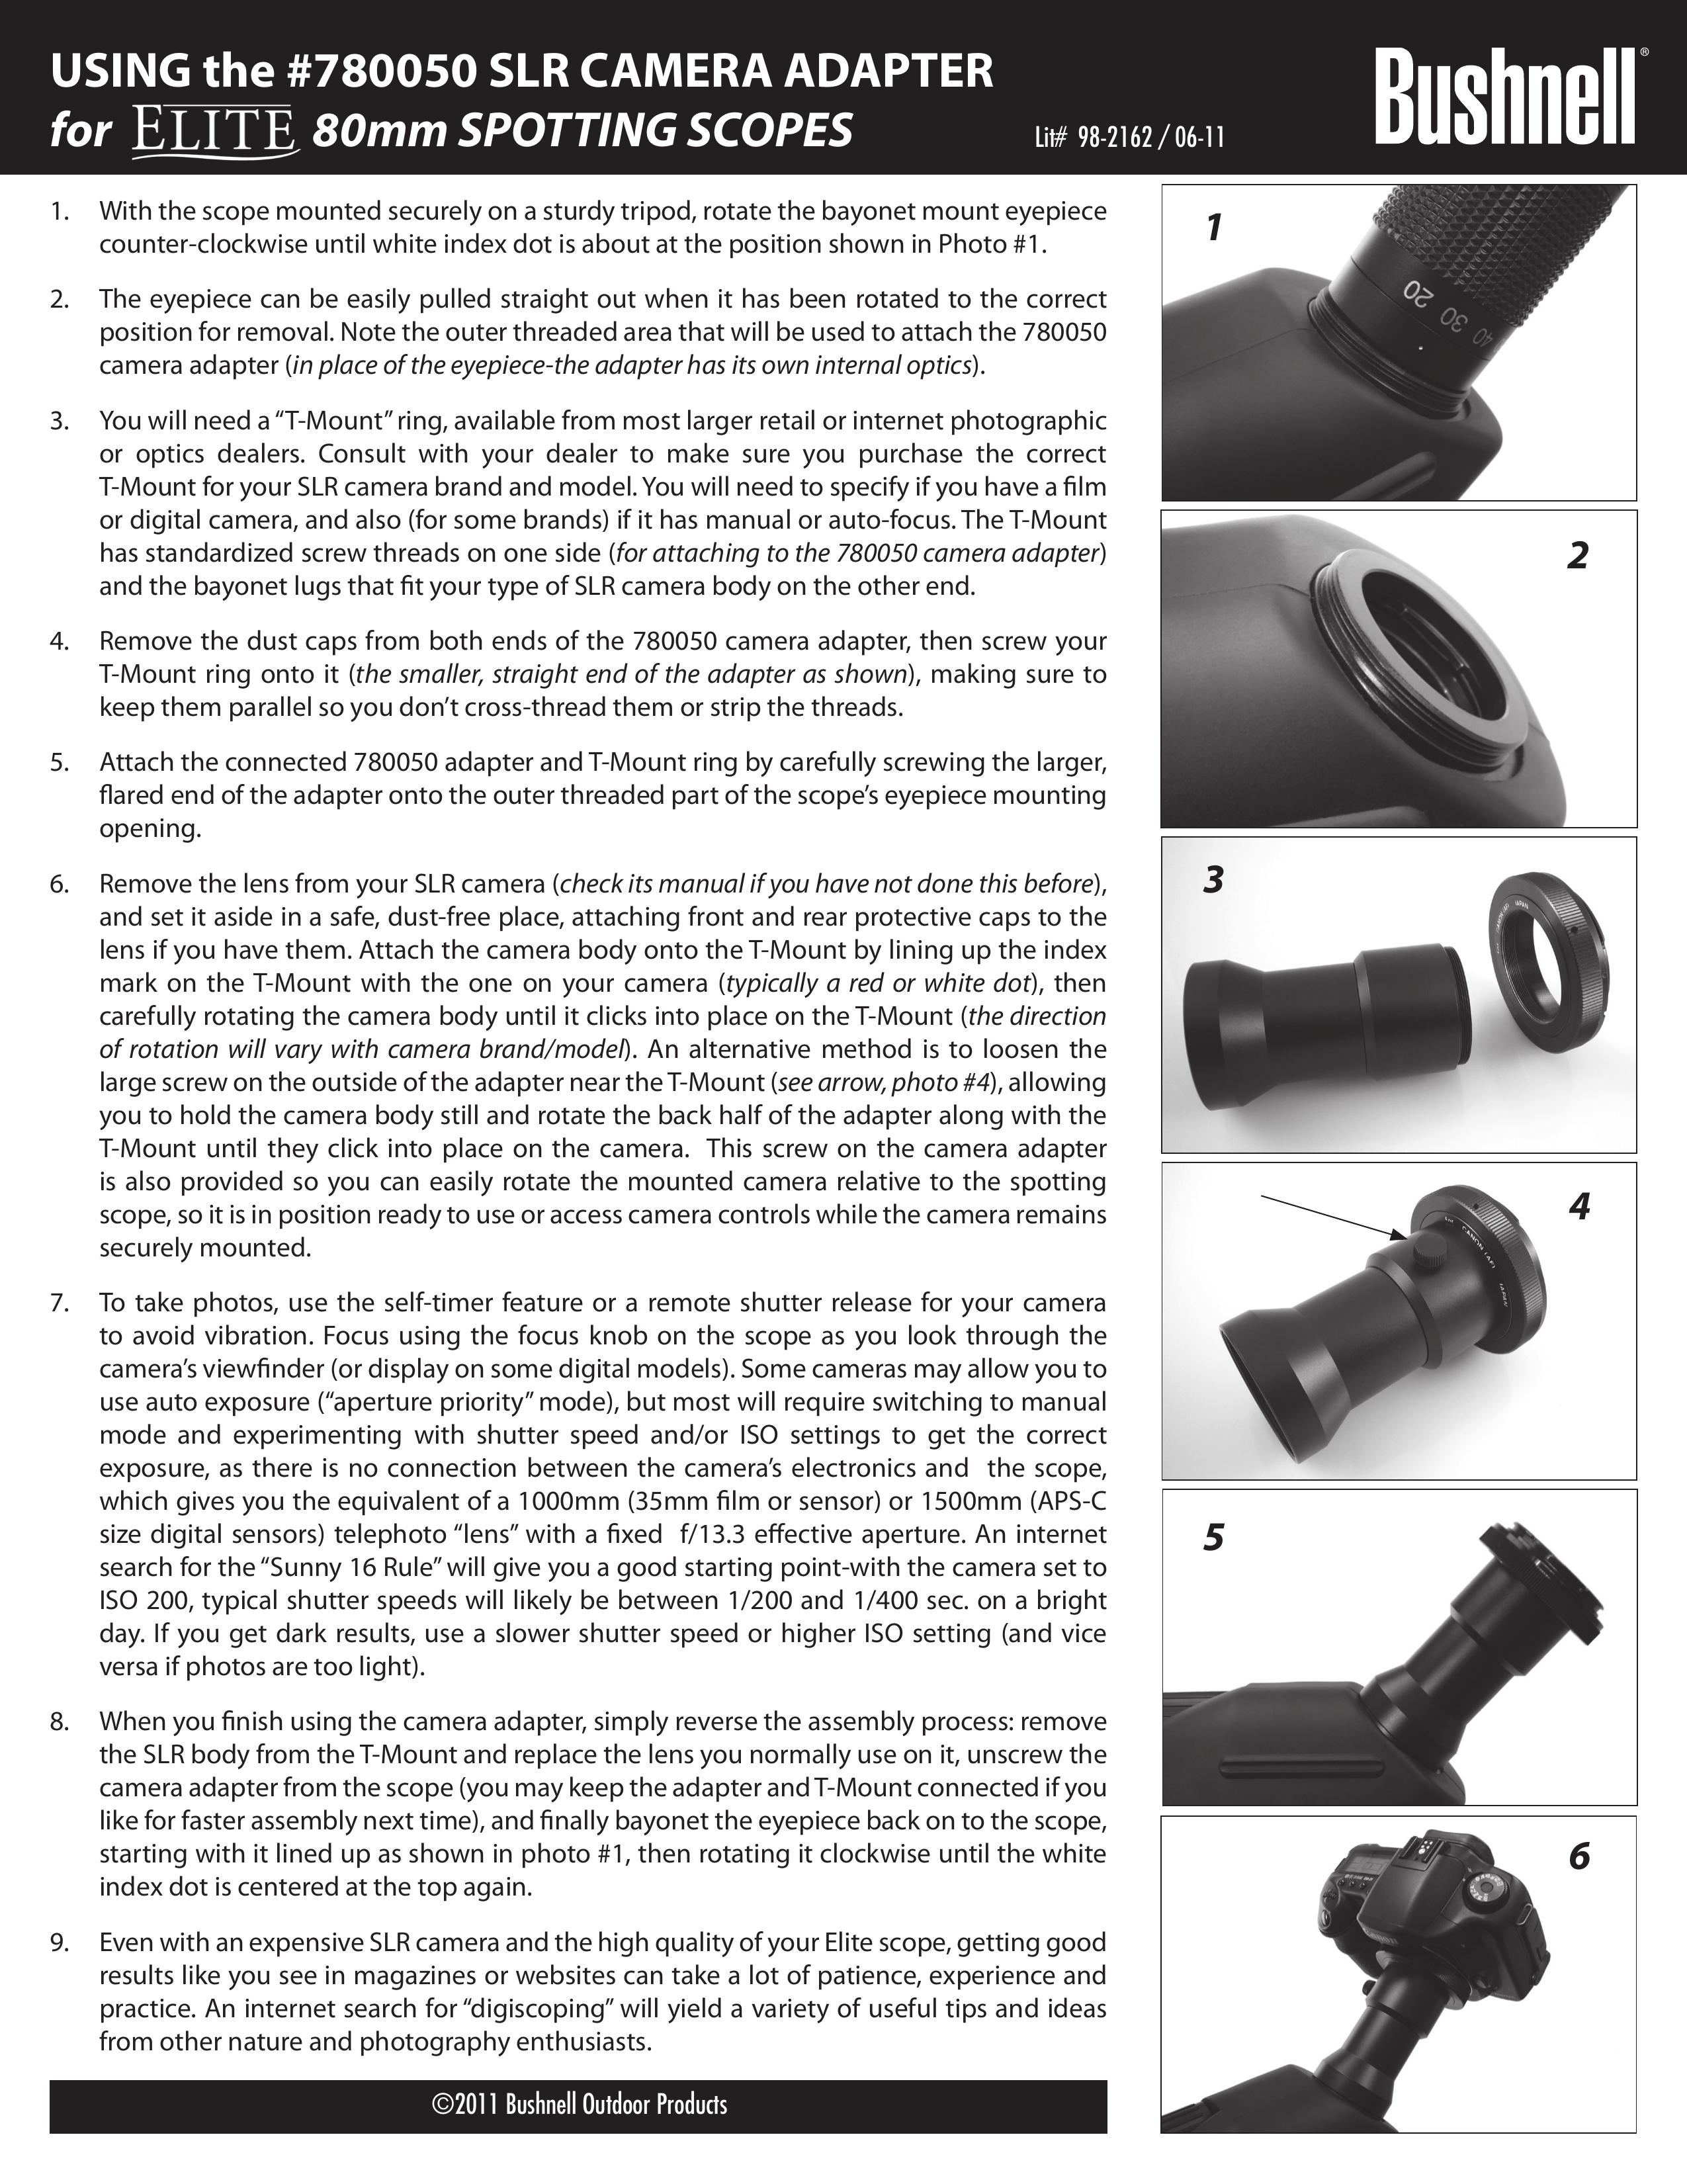 Bushnell 780050 Camera Accessories User Manual